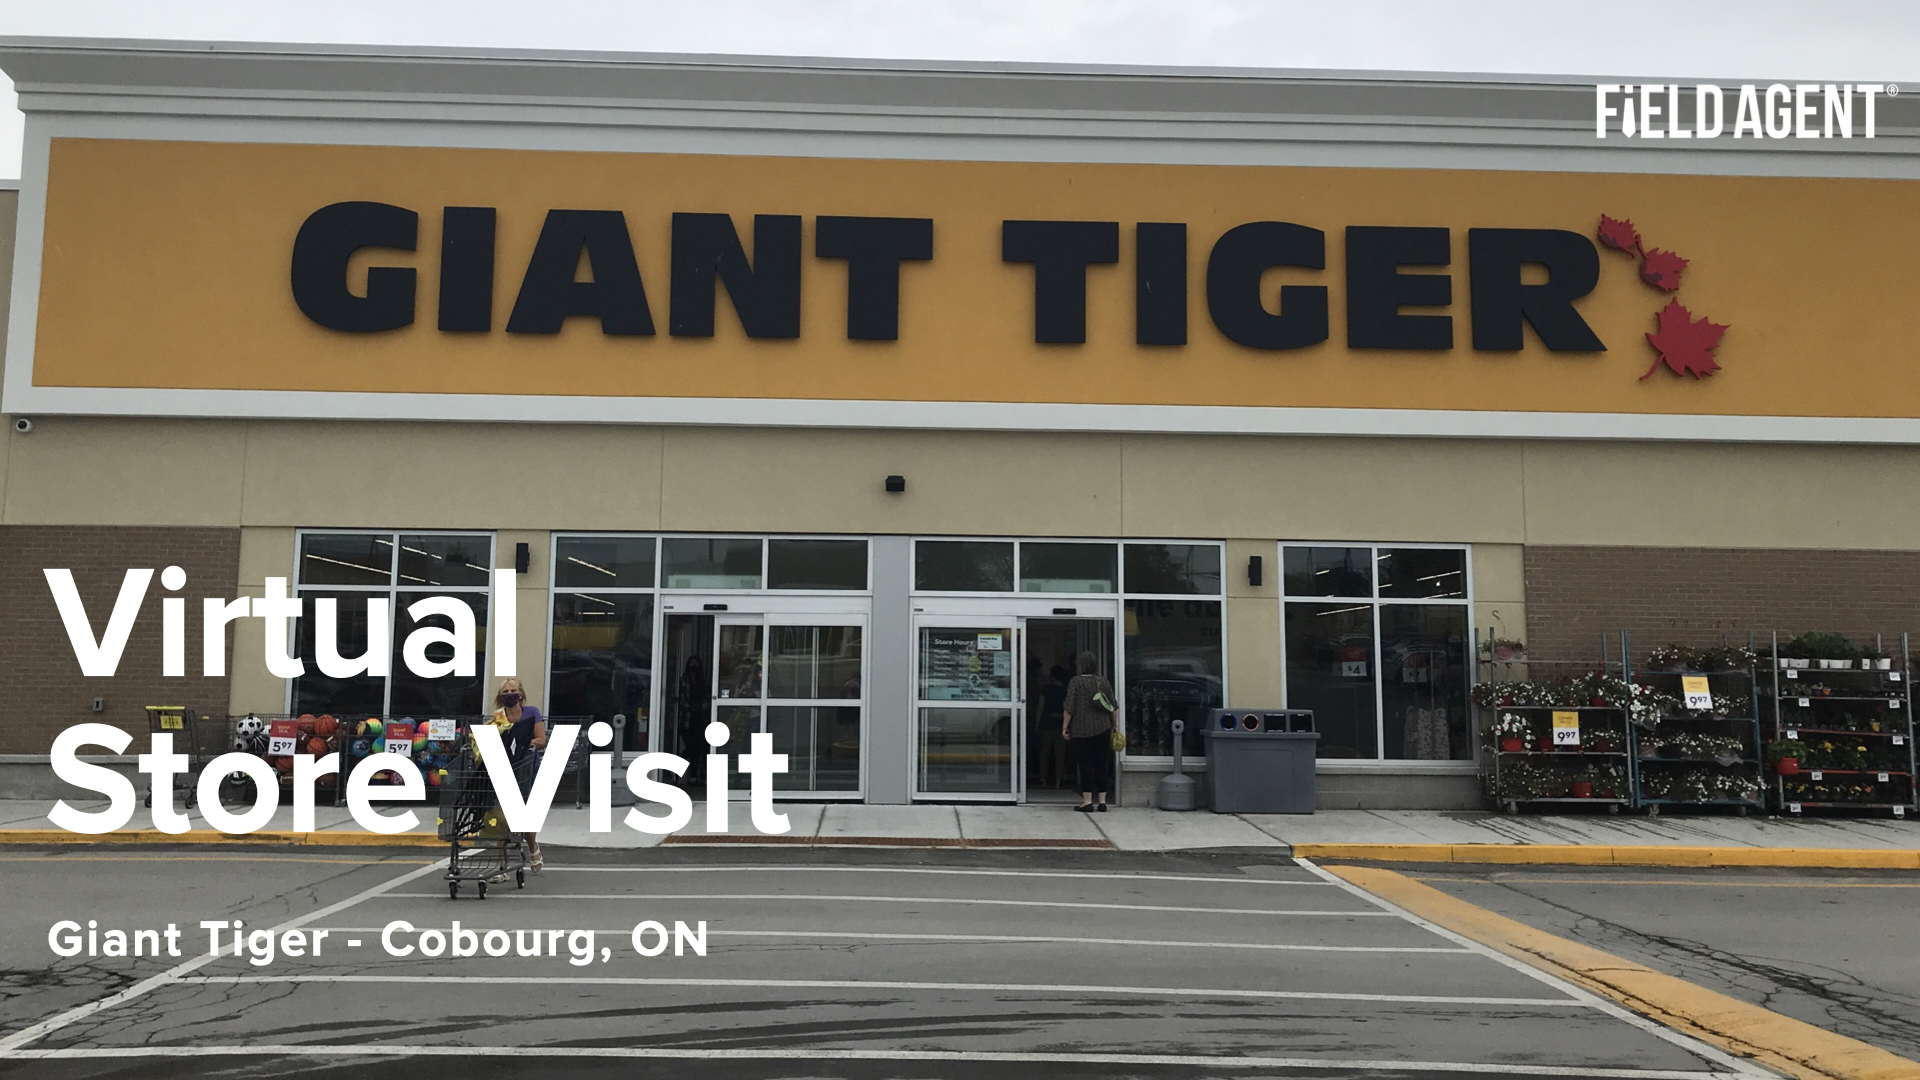 Virtual Store Tour - Giant Tiger, Cobourg